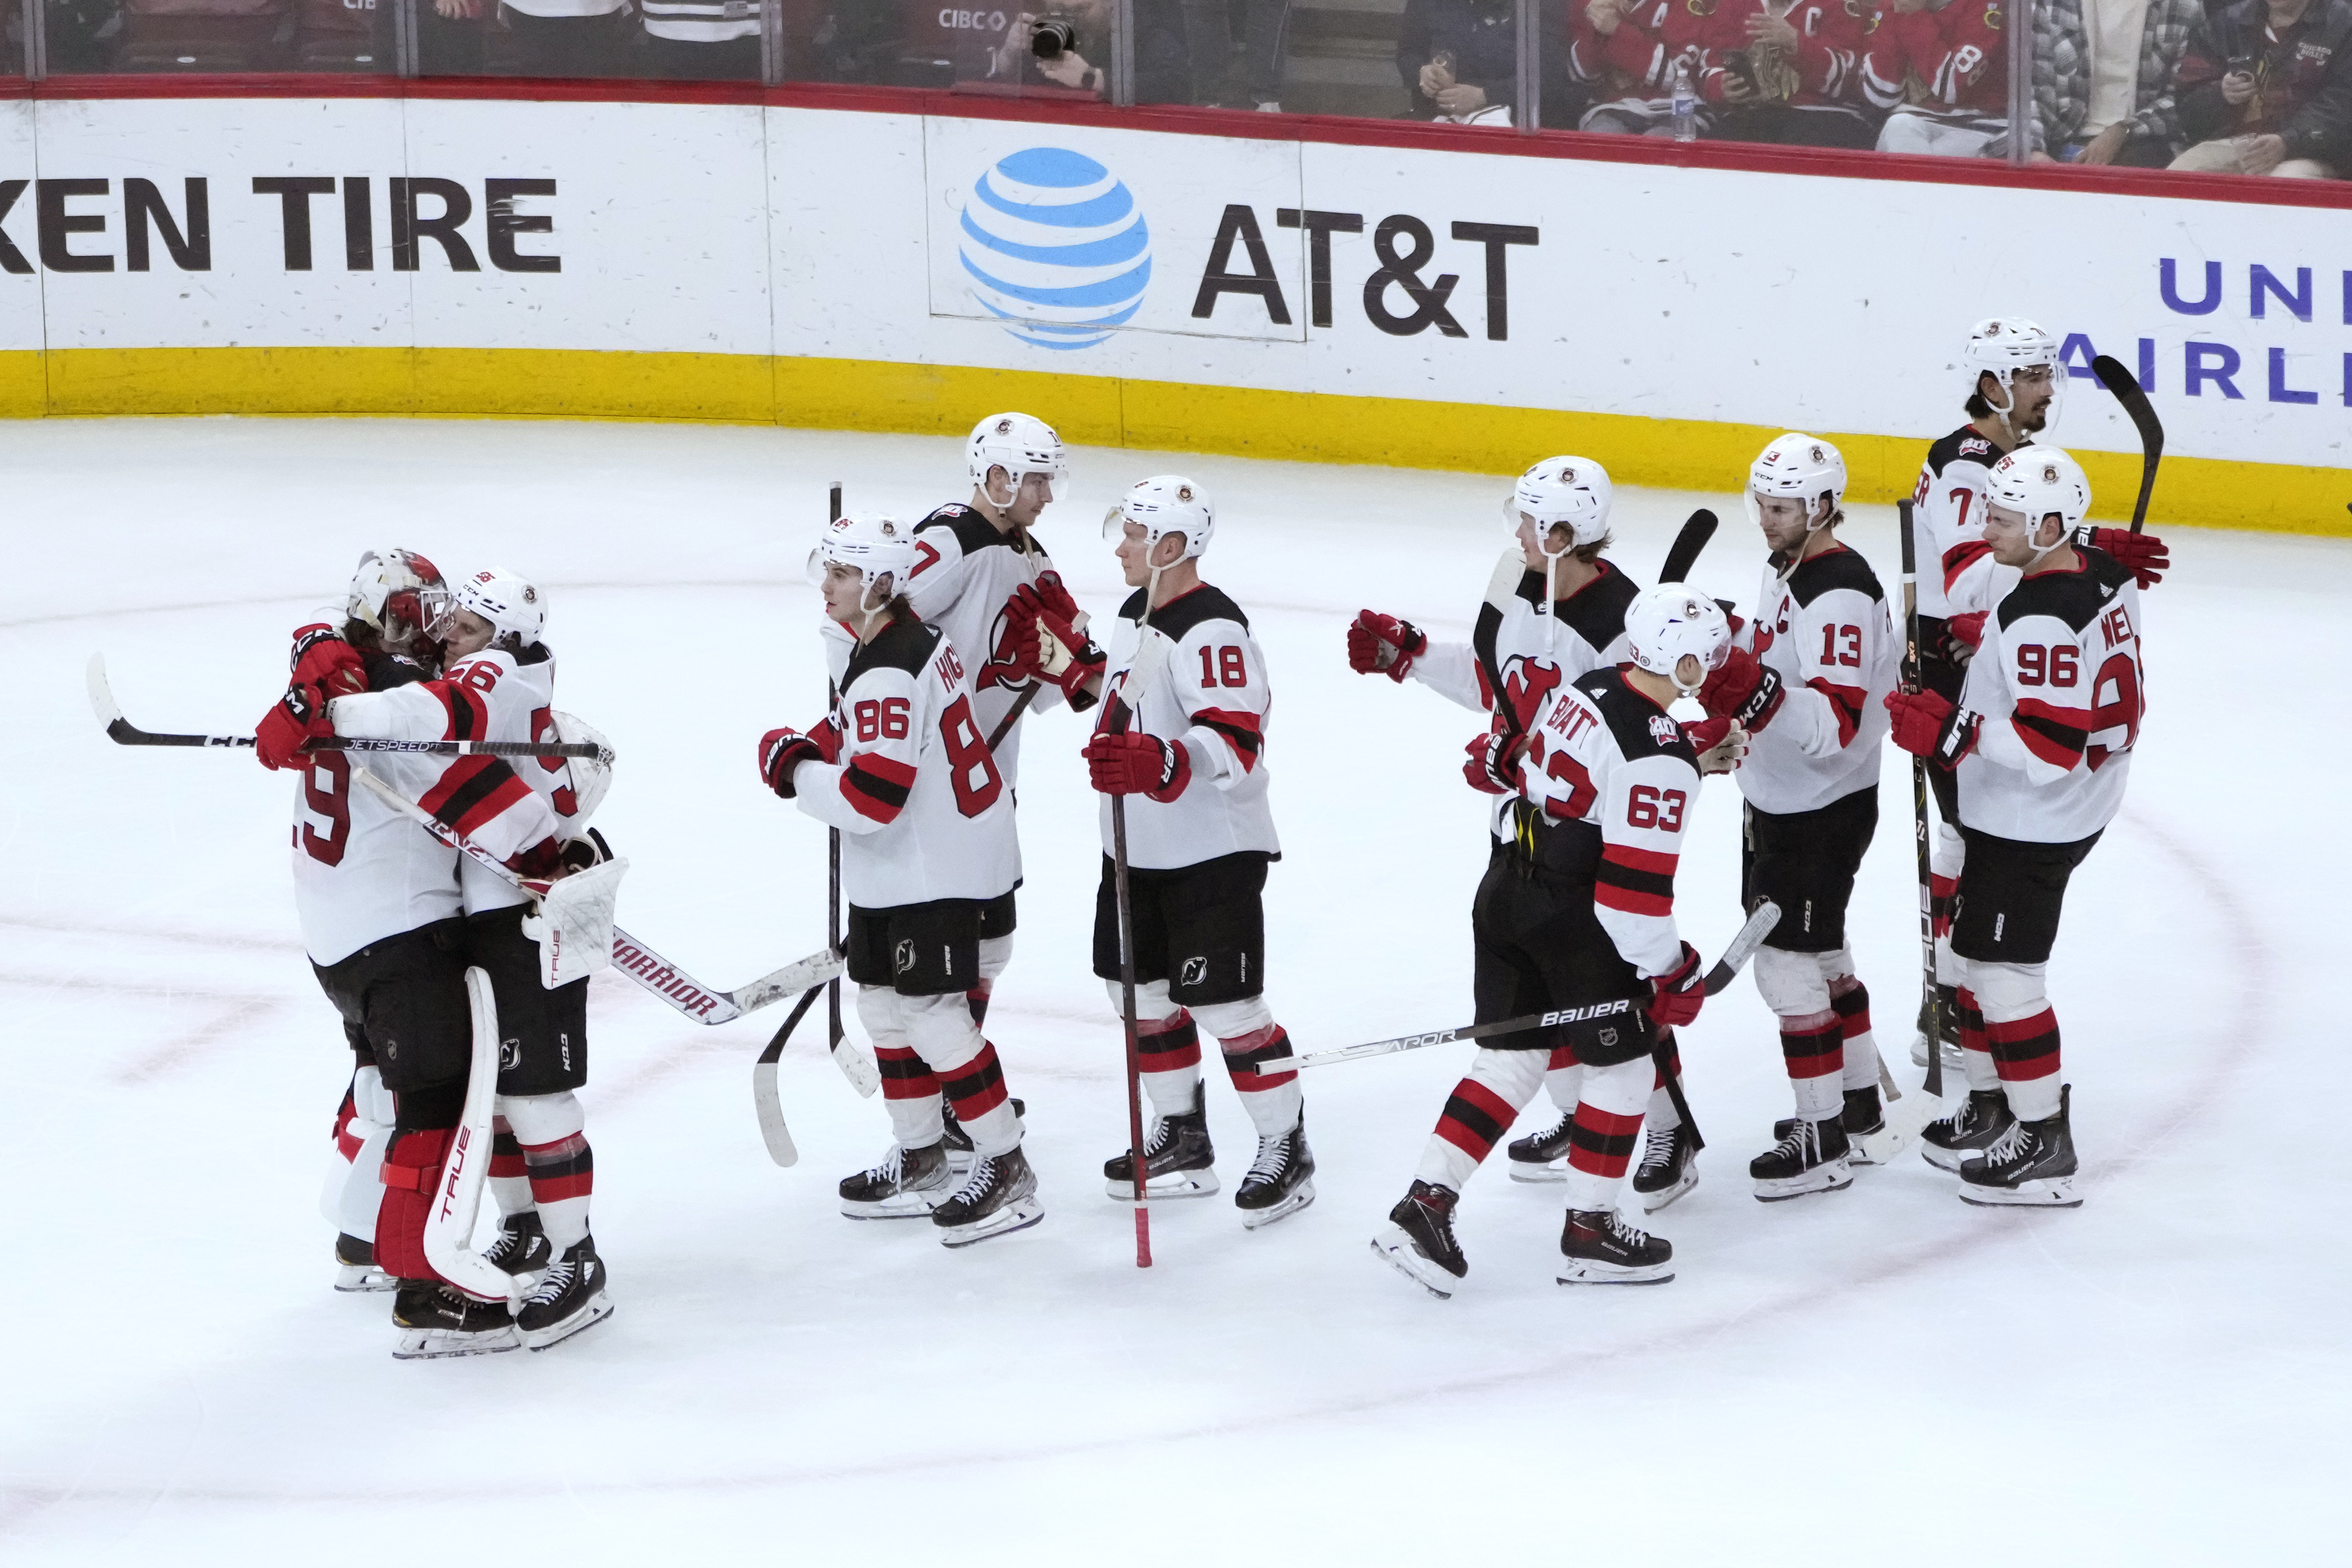 Devils end defending Cup champion Blues' 8-game win streak